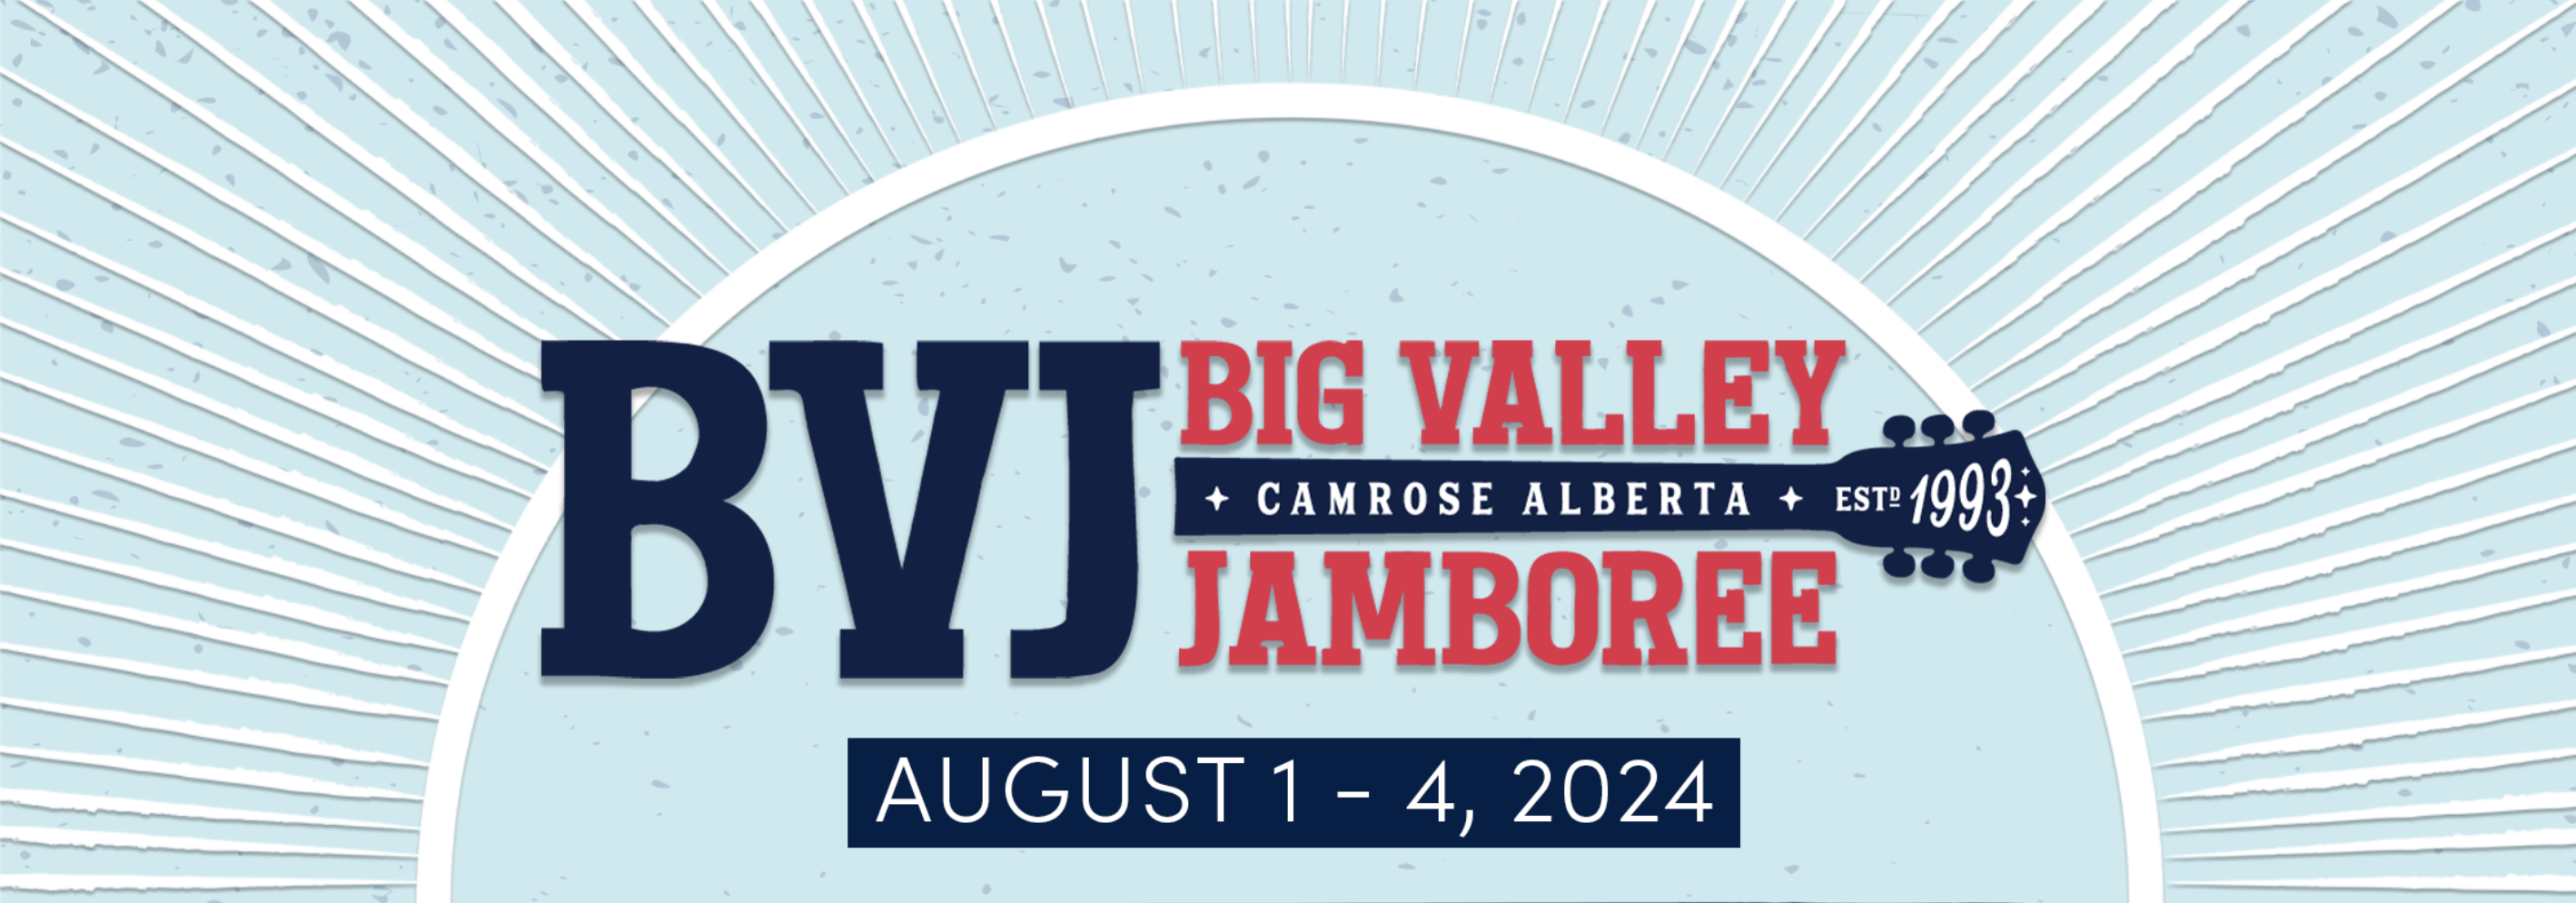 Big Valley Jamboree